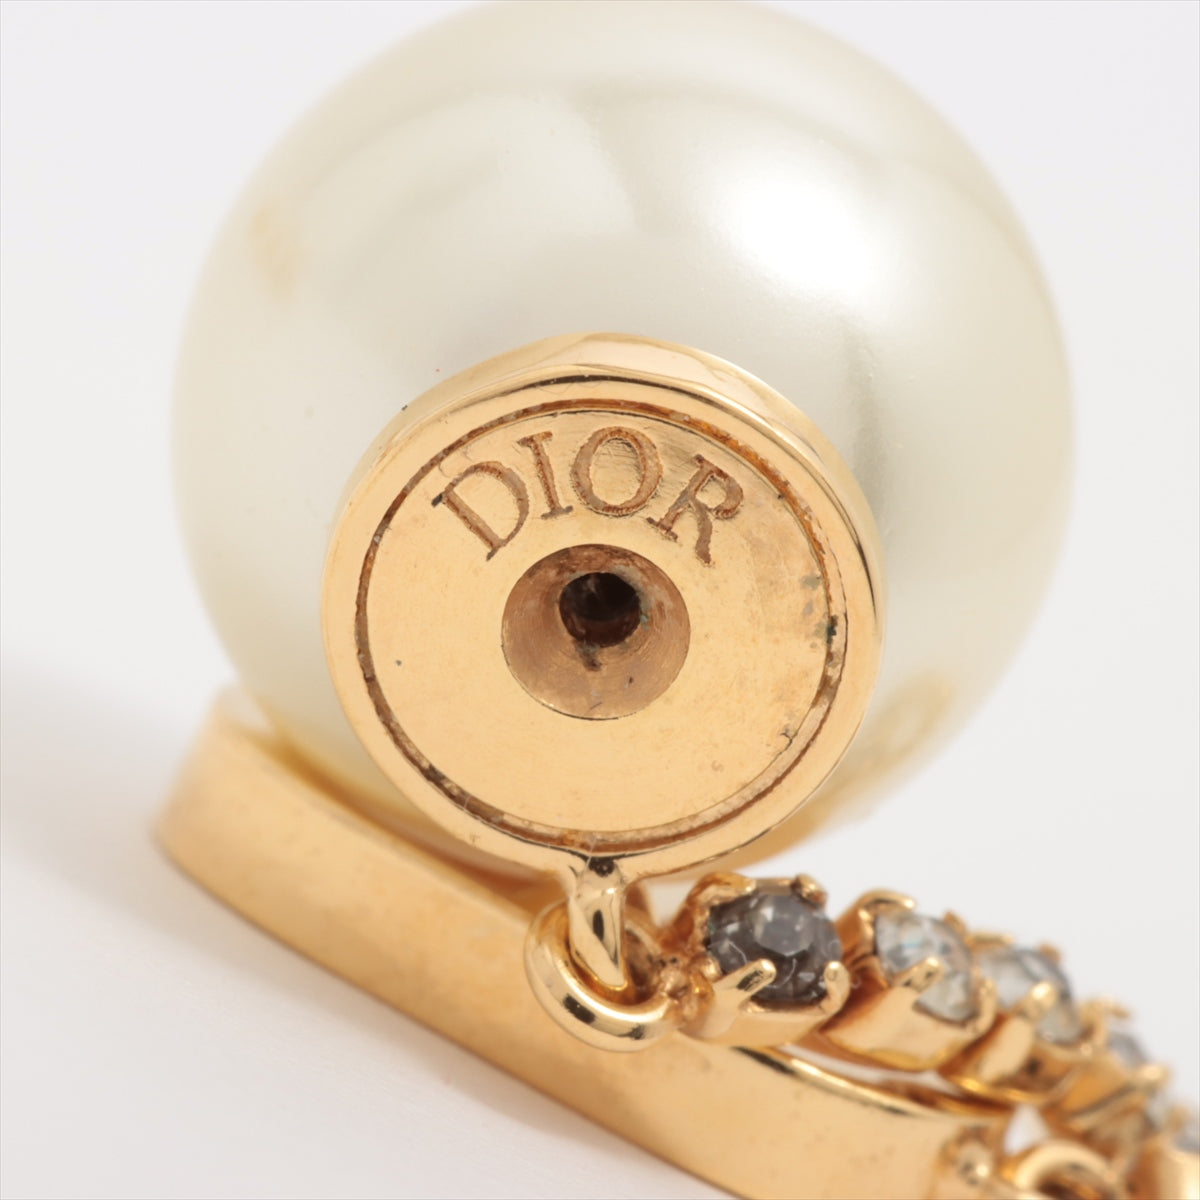 Christian Dior Dior Tribales  DIOR Tribal Piercing jewelry (for both ears) GP x rhinestone x imitation pearl Gold